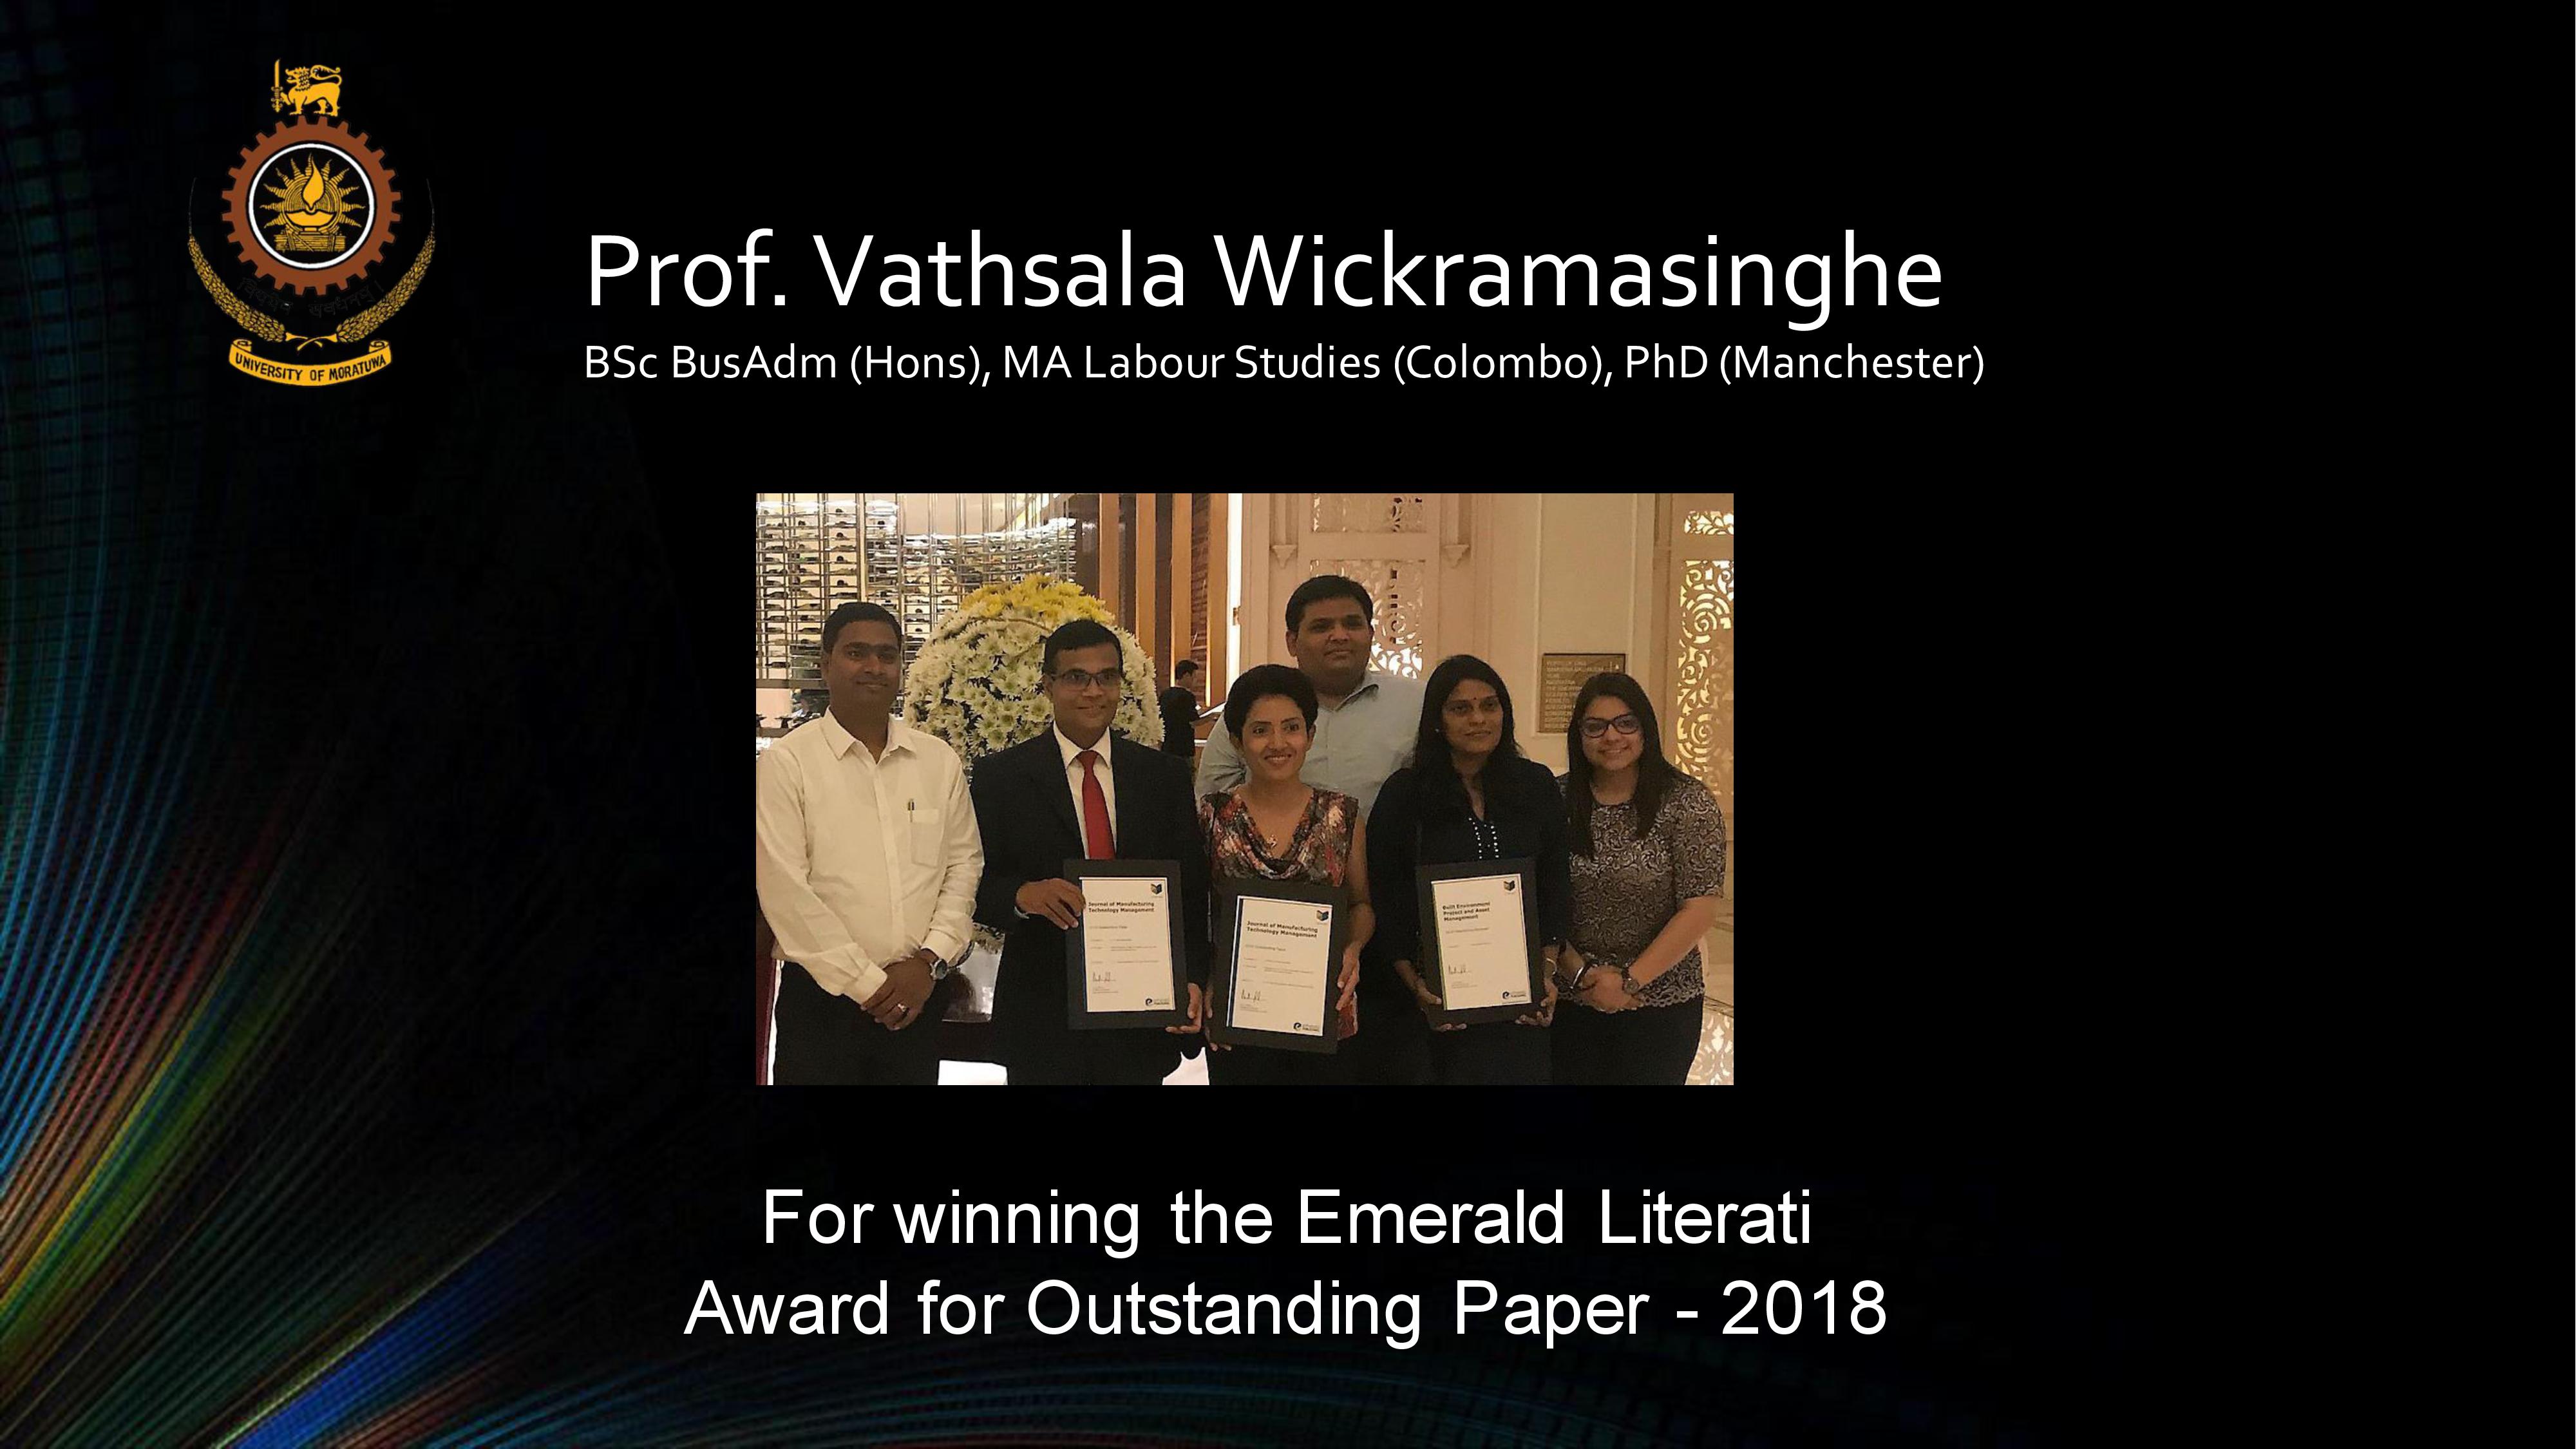 Winner of the Emerald Literati Award for Outstanding Paper 2018